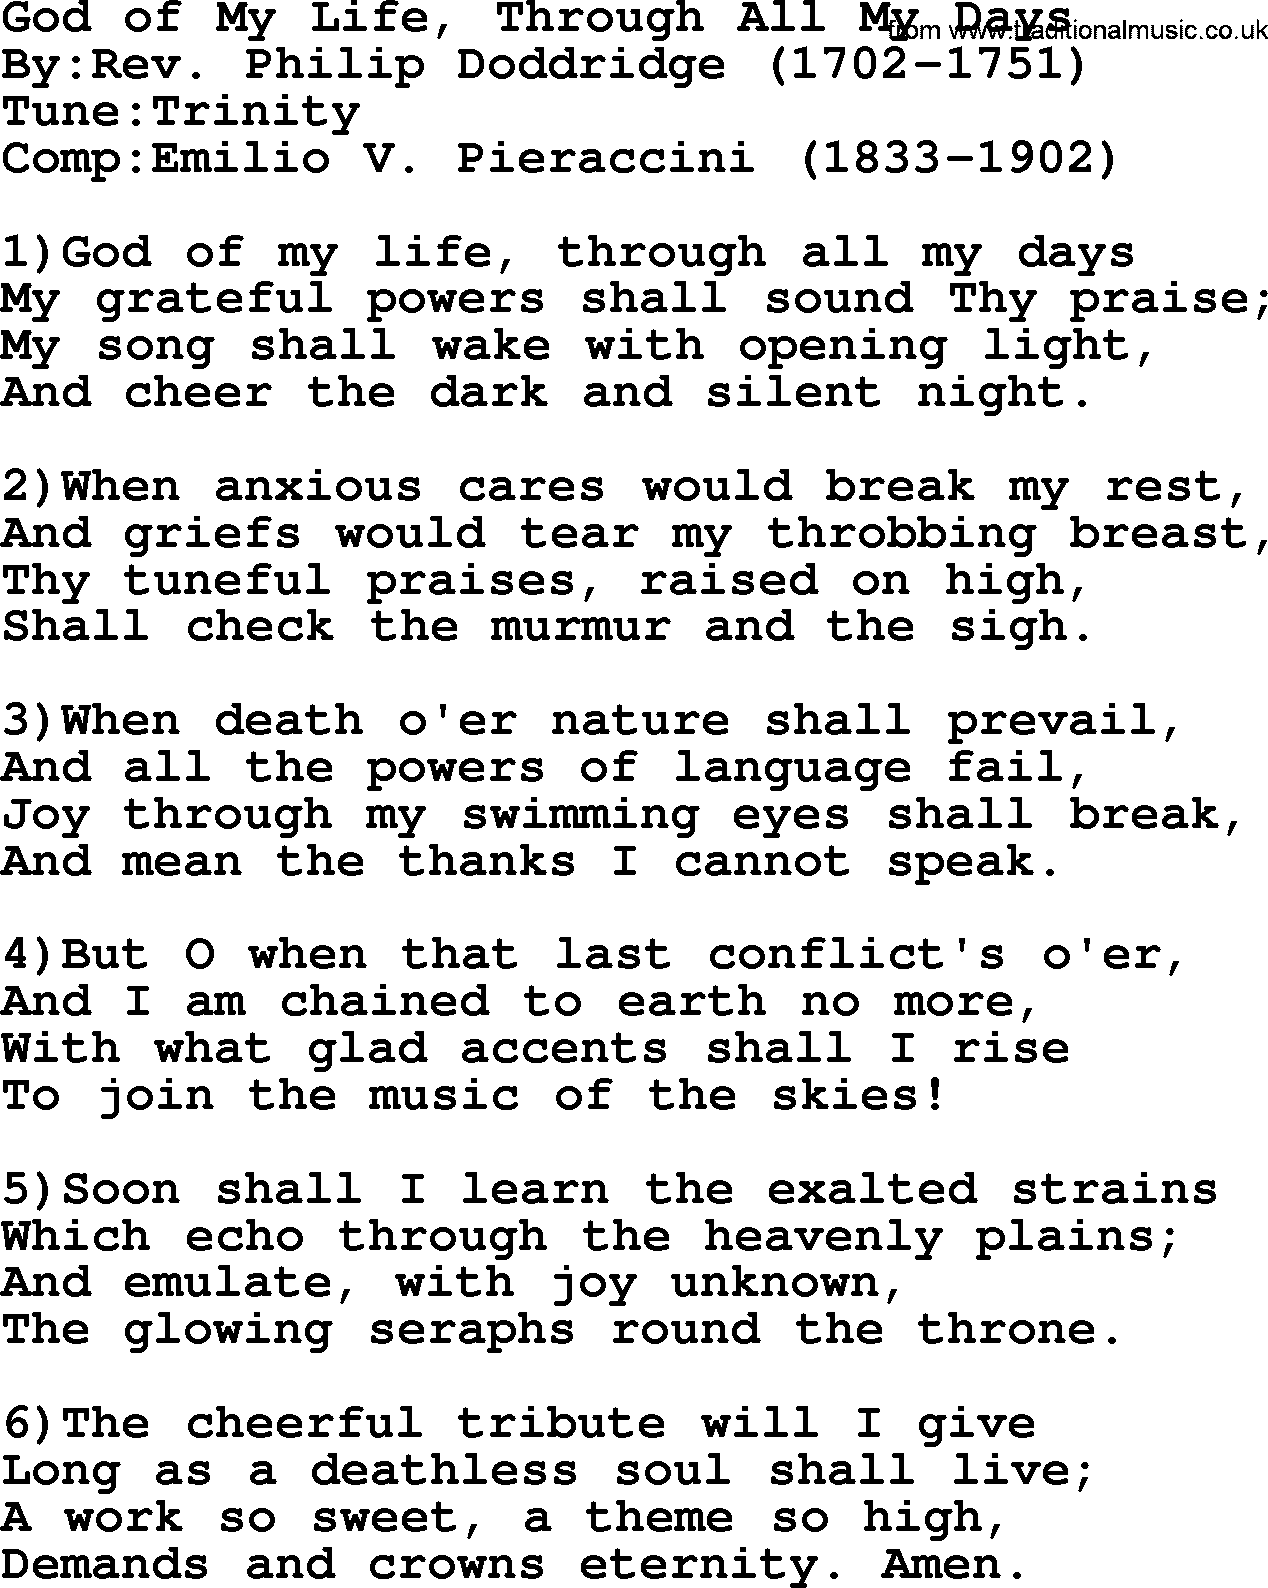 Methodist Hymn: God Of My Life, Through All My Days, lyrics